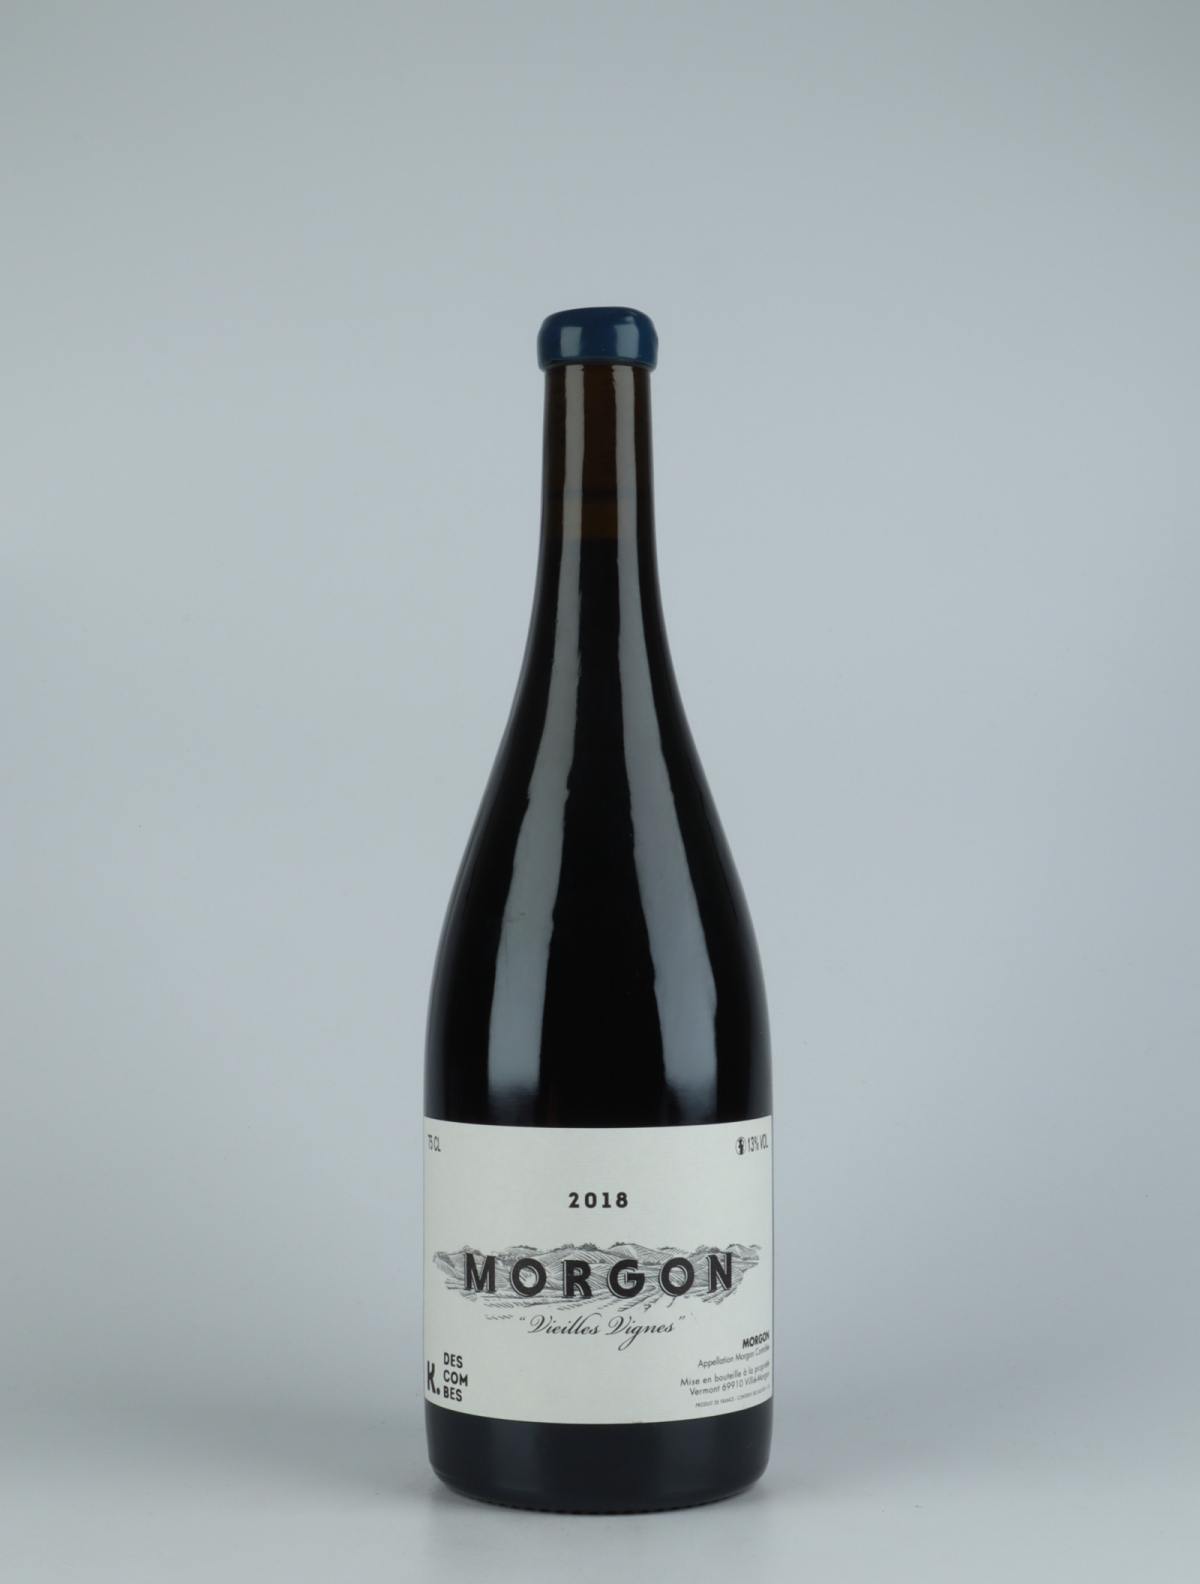 En flaske 2018 Morgon Vieilles Vignes Rødvin fra Kewin Descombes, Beaujolais i Frankrig